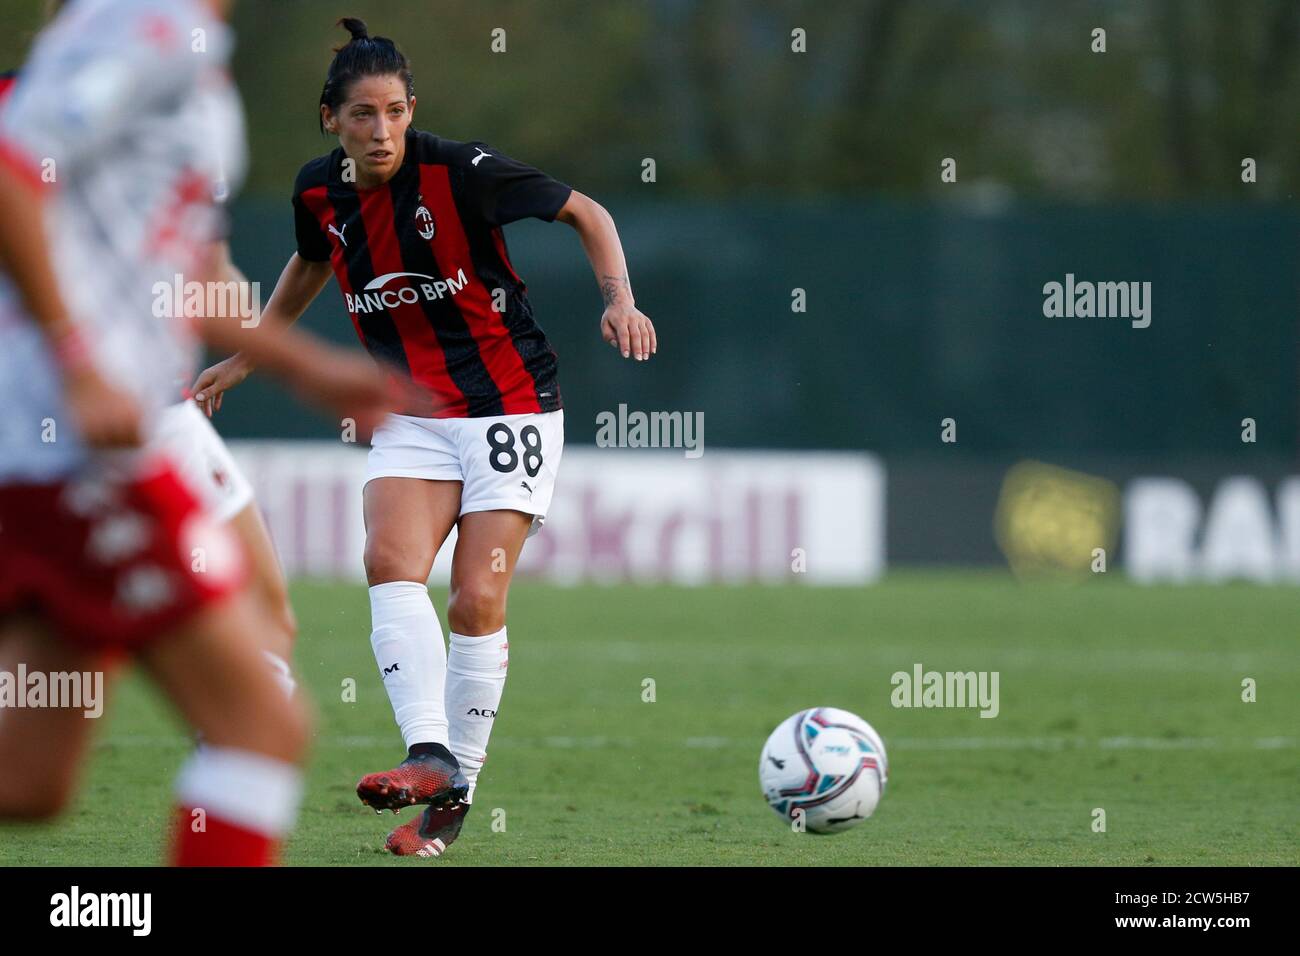 Claudia Mauri (AC Milan) during AC Milan vs Pink Bari, Italian Soccer Serie A Women Championship, Milan, Italy, 05 Sep 2020 Stock Photo